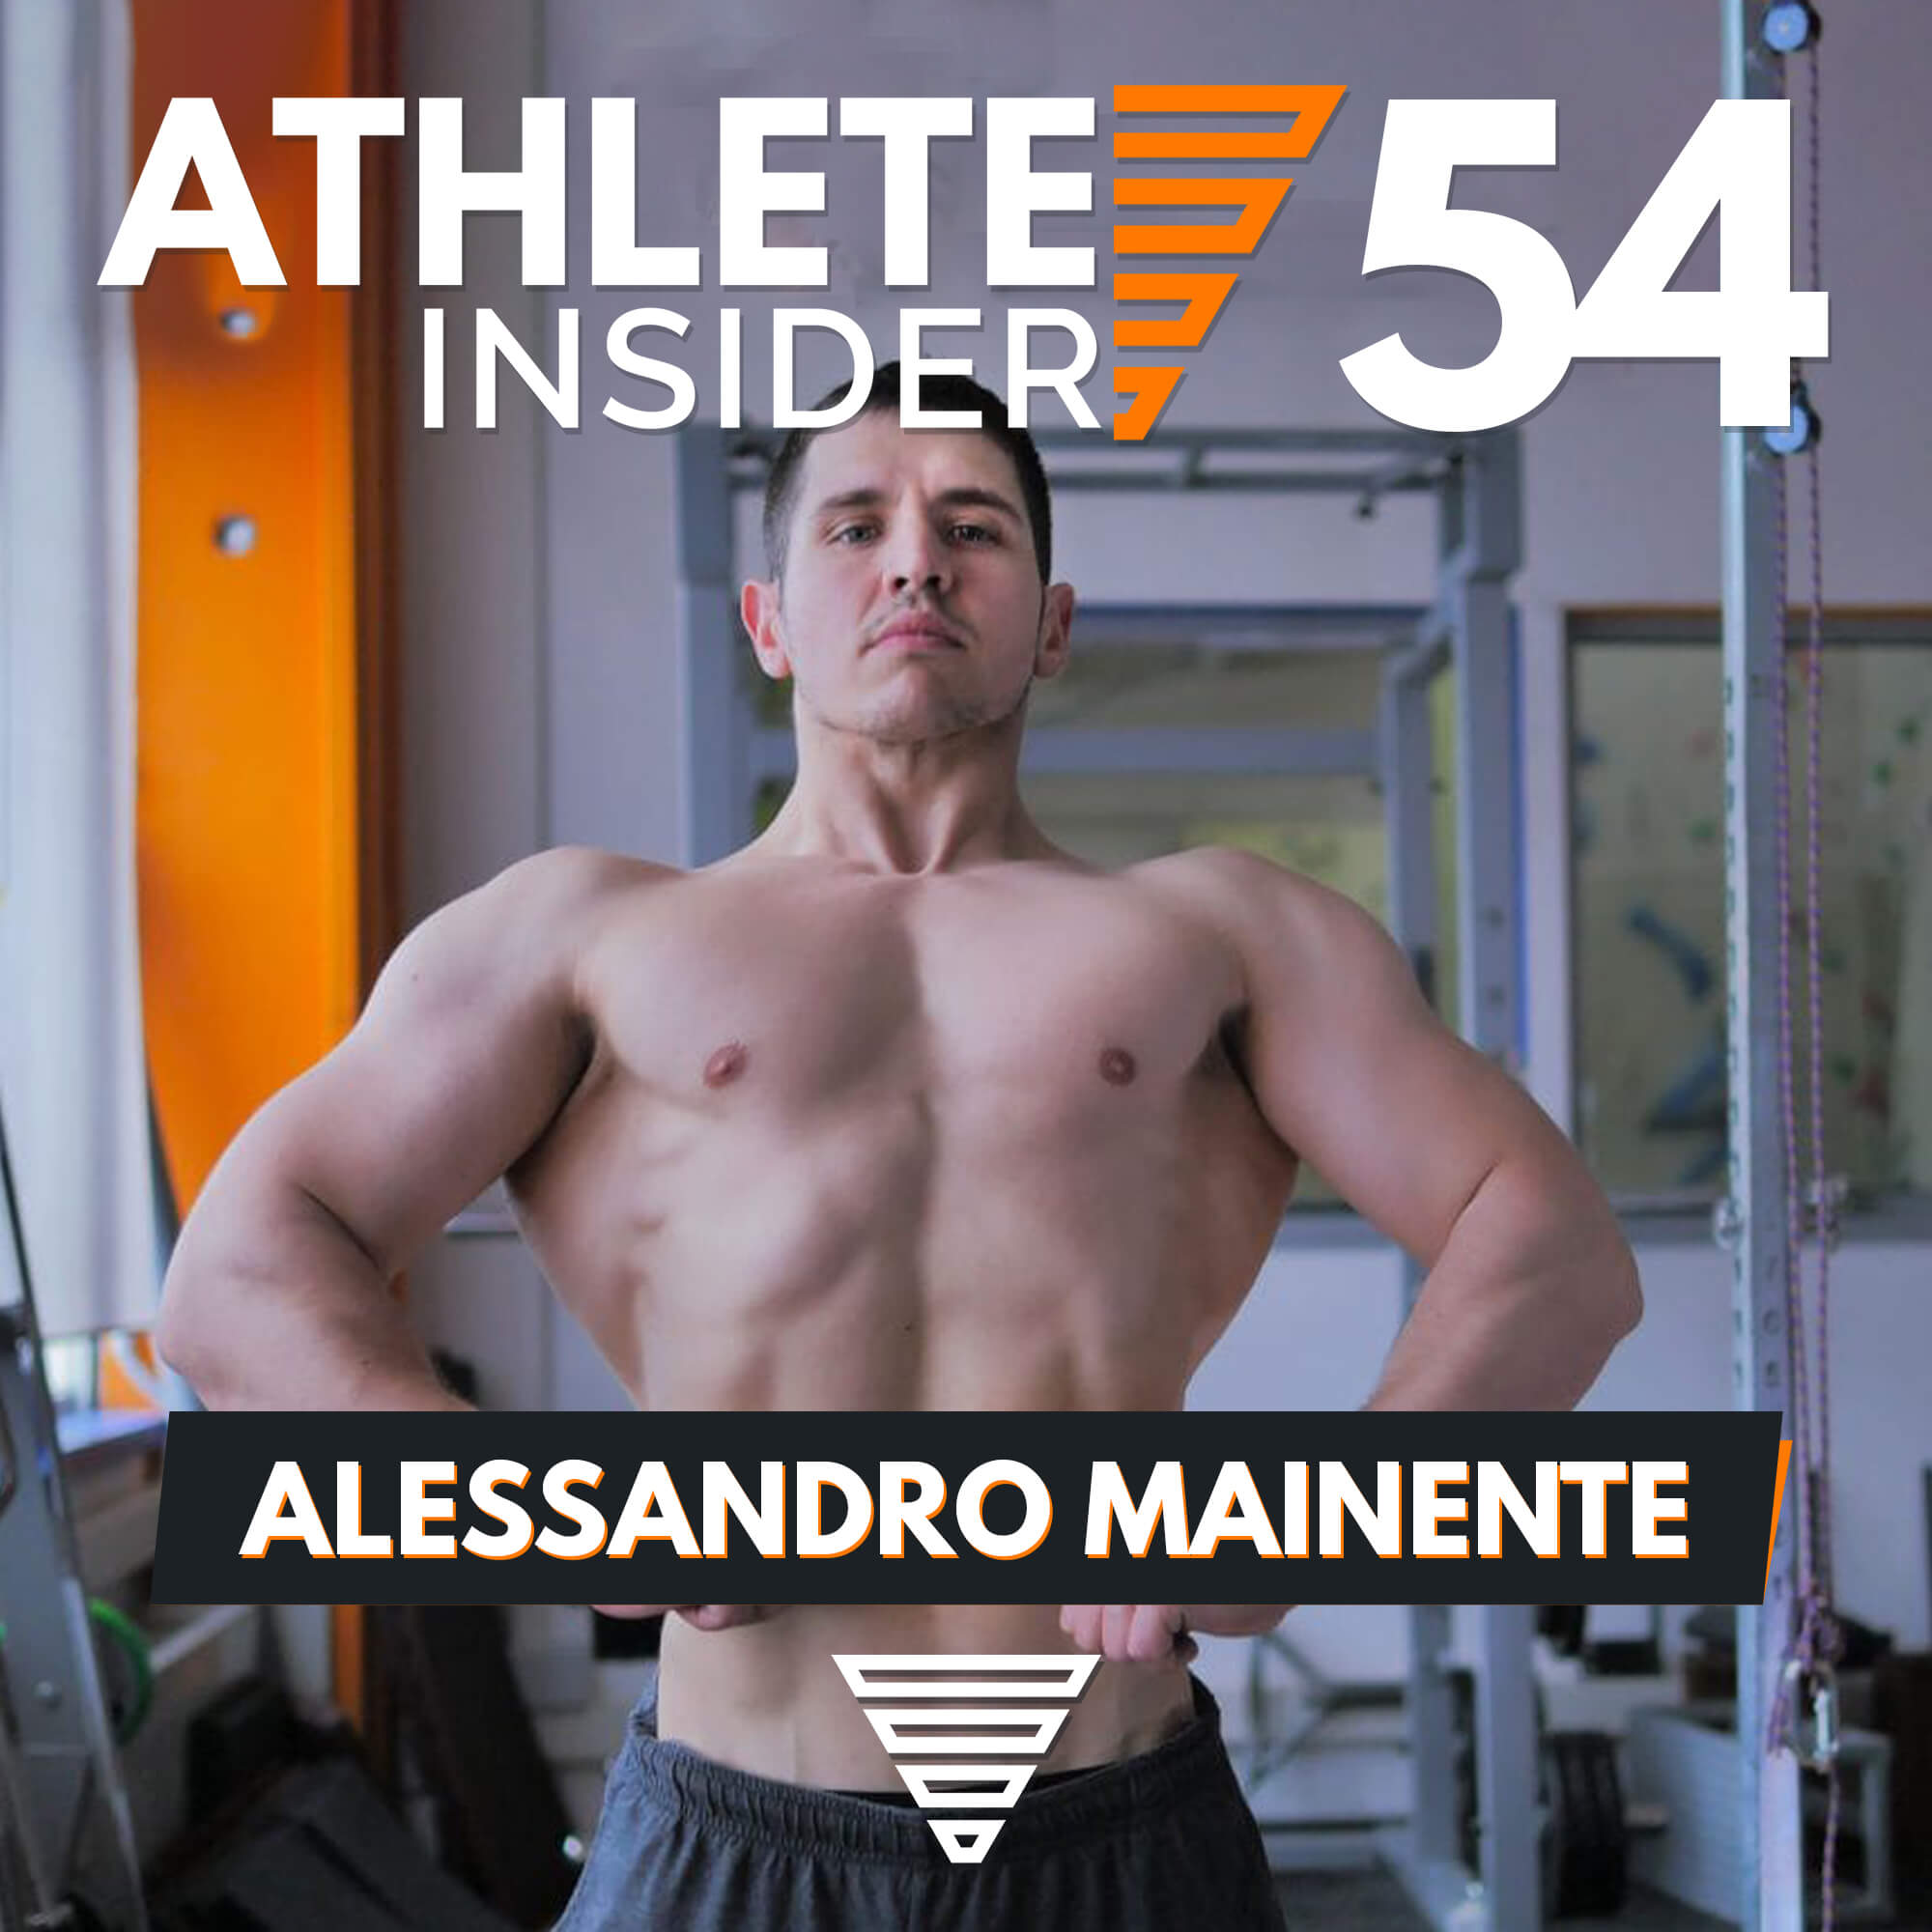 ALESSANDRO MAINENTE | Calisthenics Training Advice | Interview | The Athlete Insider Podcast #54